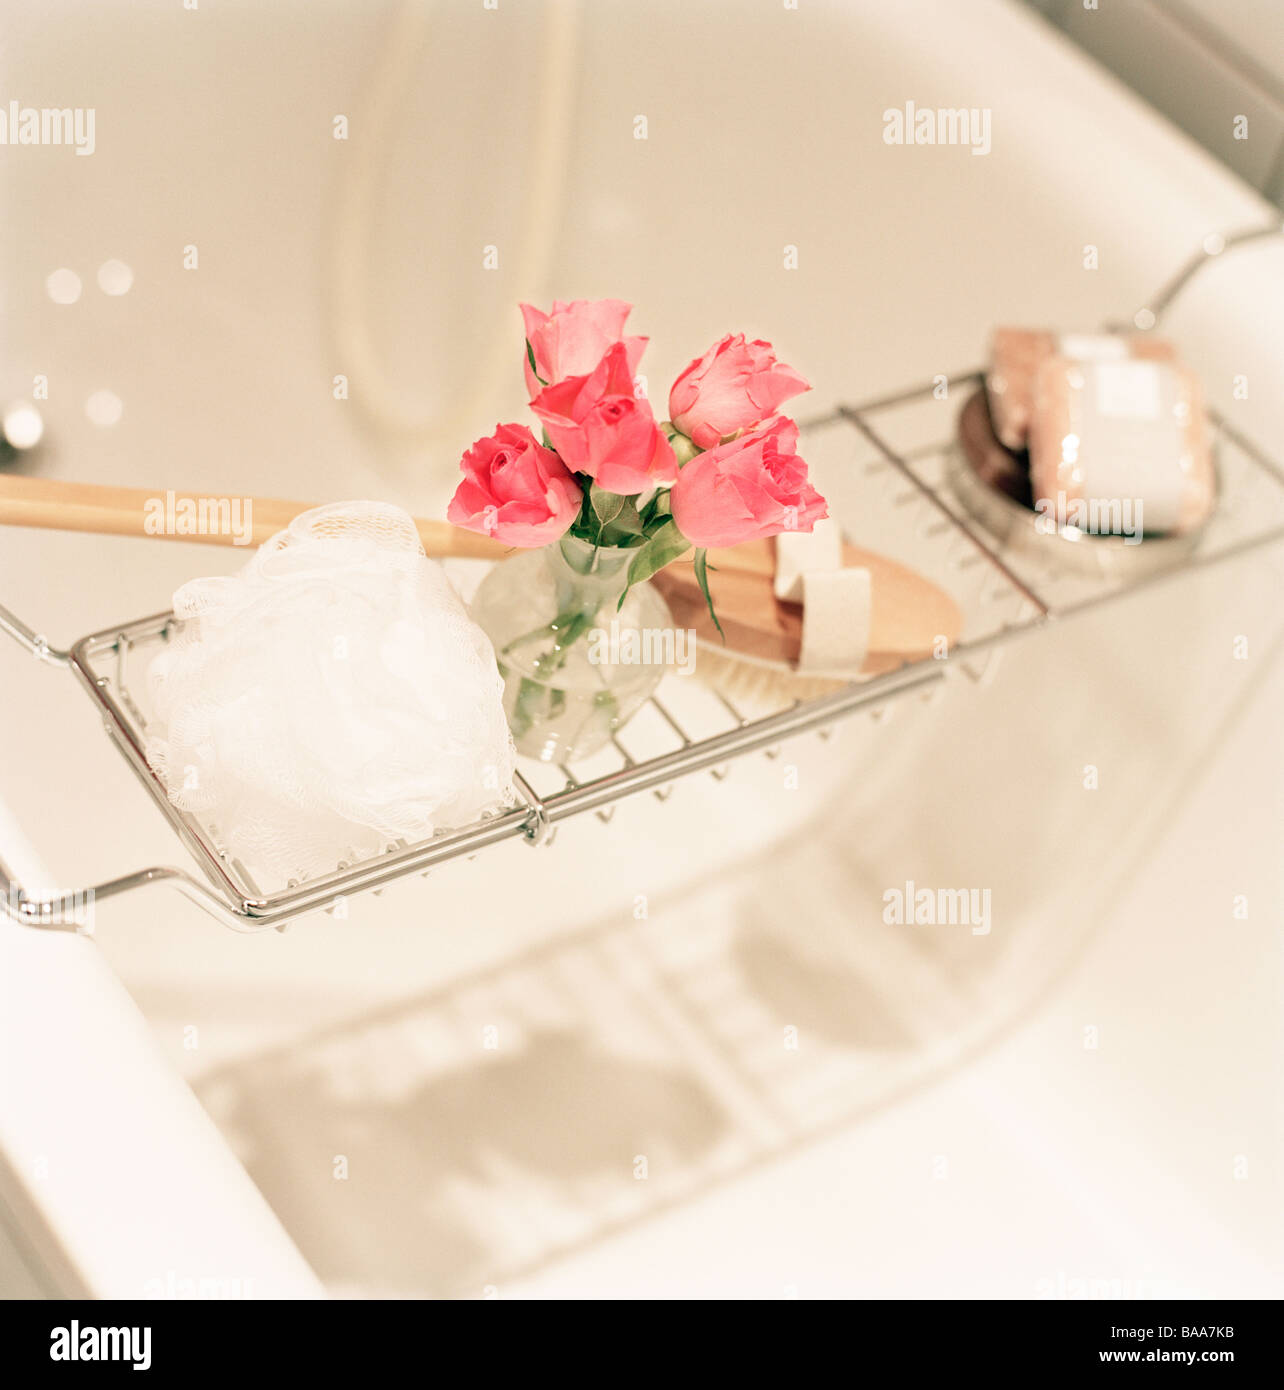 Roses in a bathtub, Stockholm, Sweden. Stock Photo